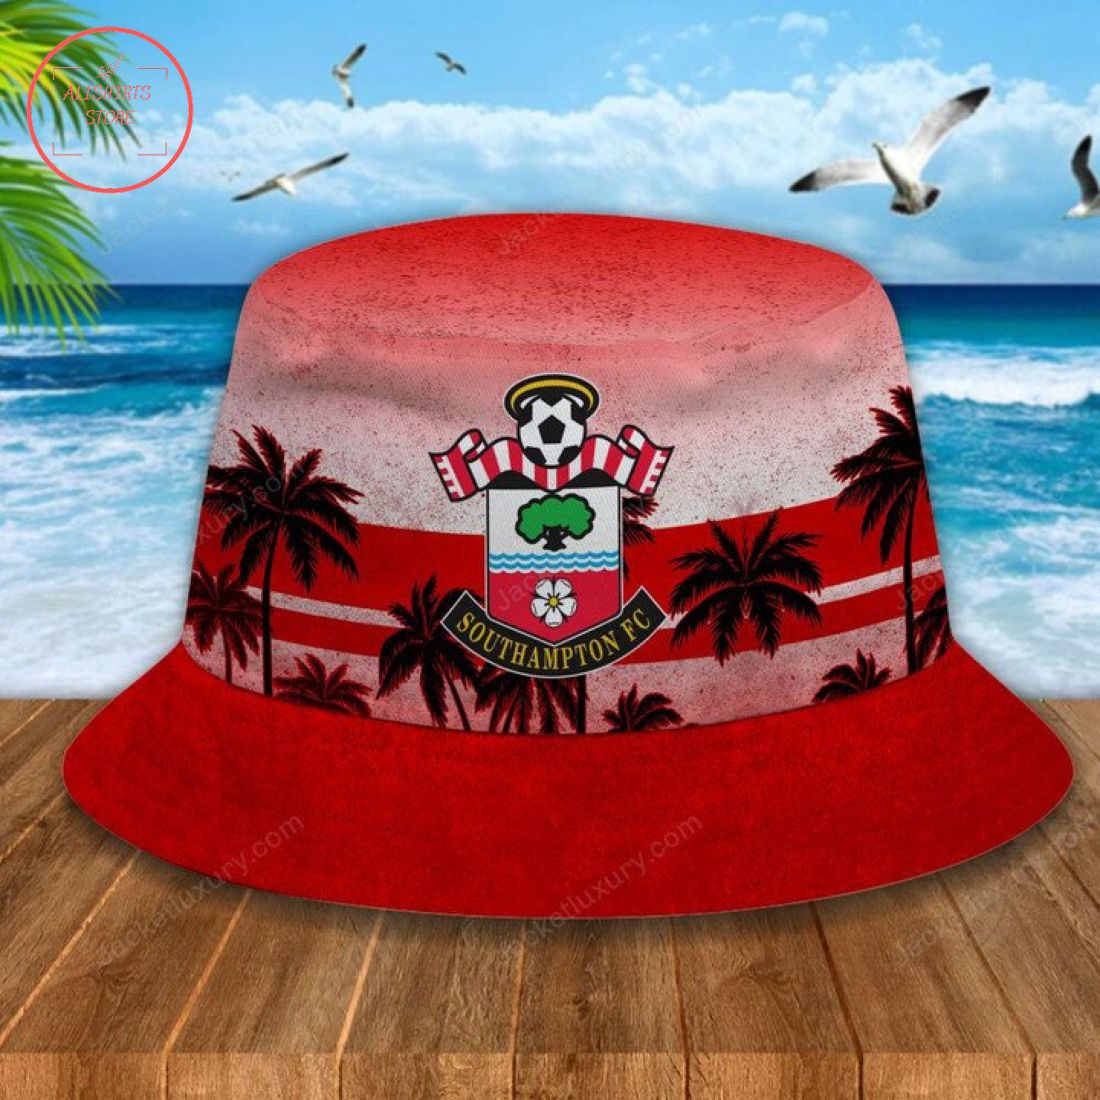 EPL Southampton FC Bucket Hat